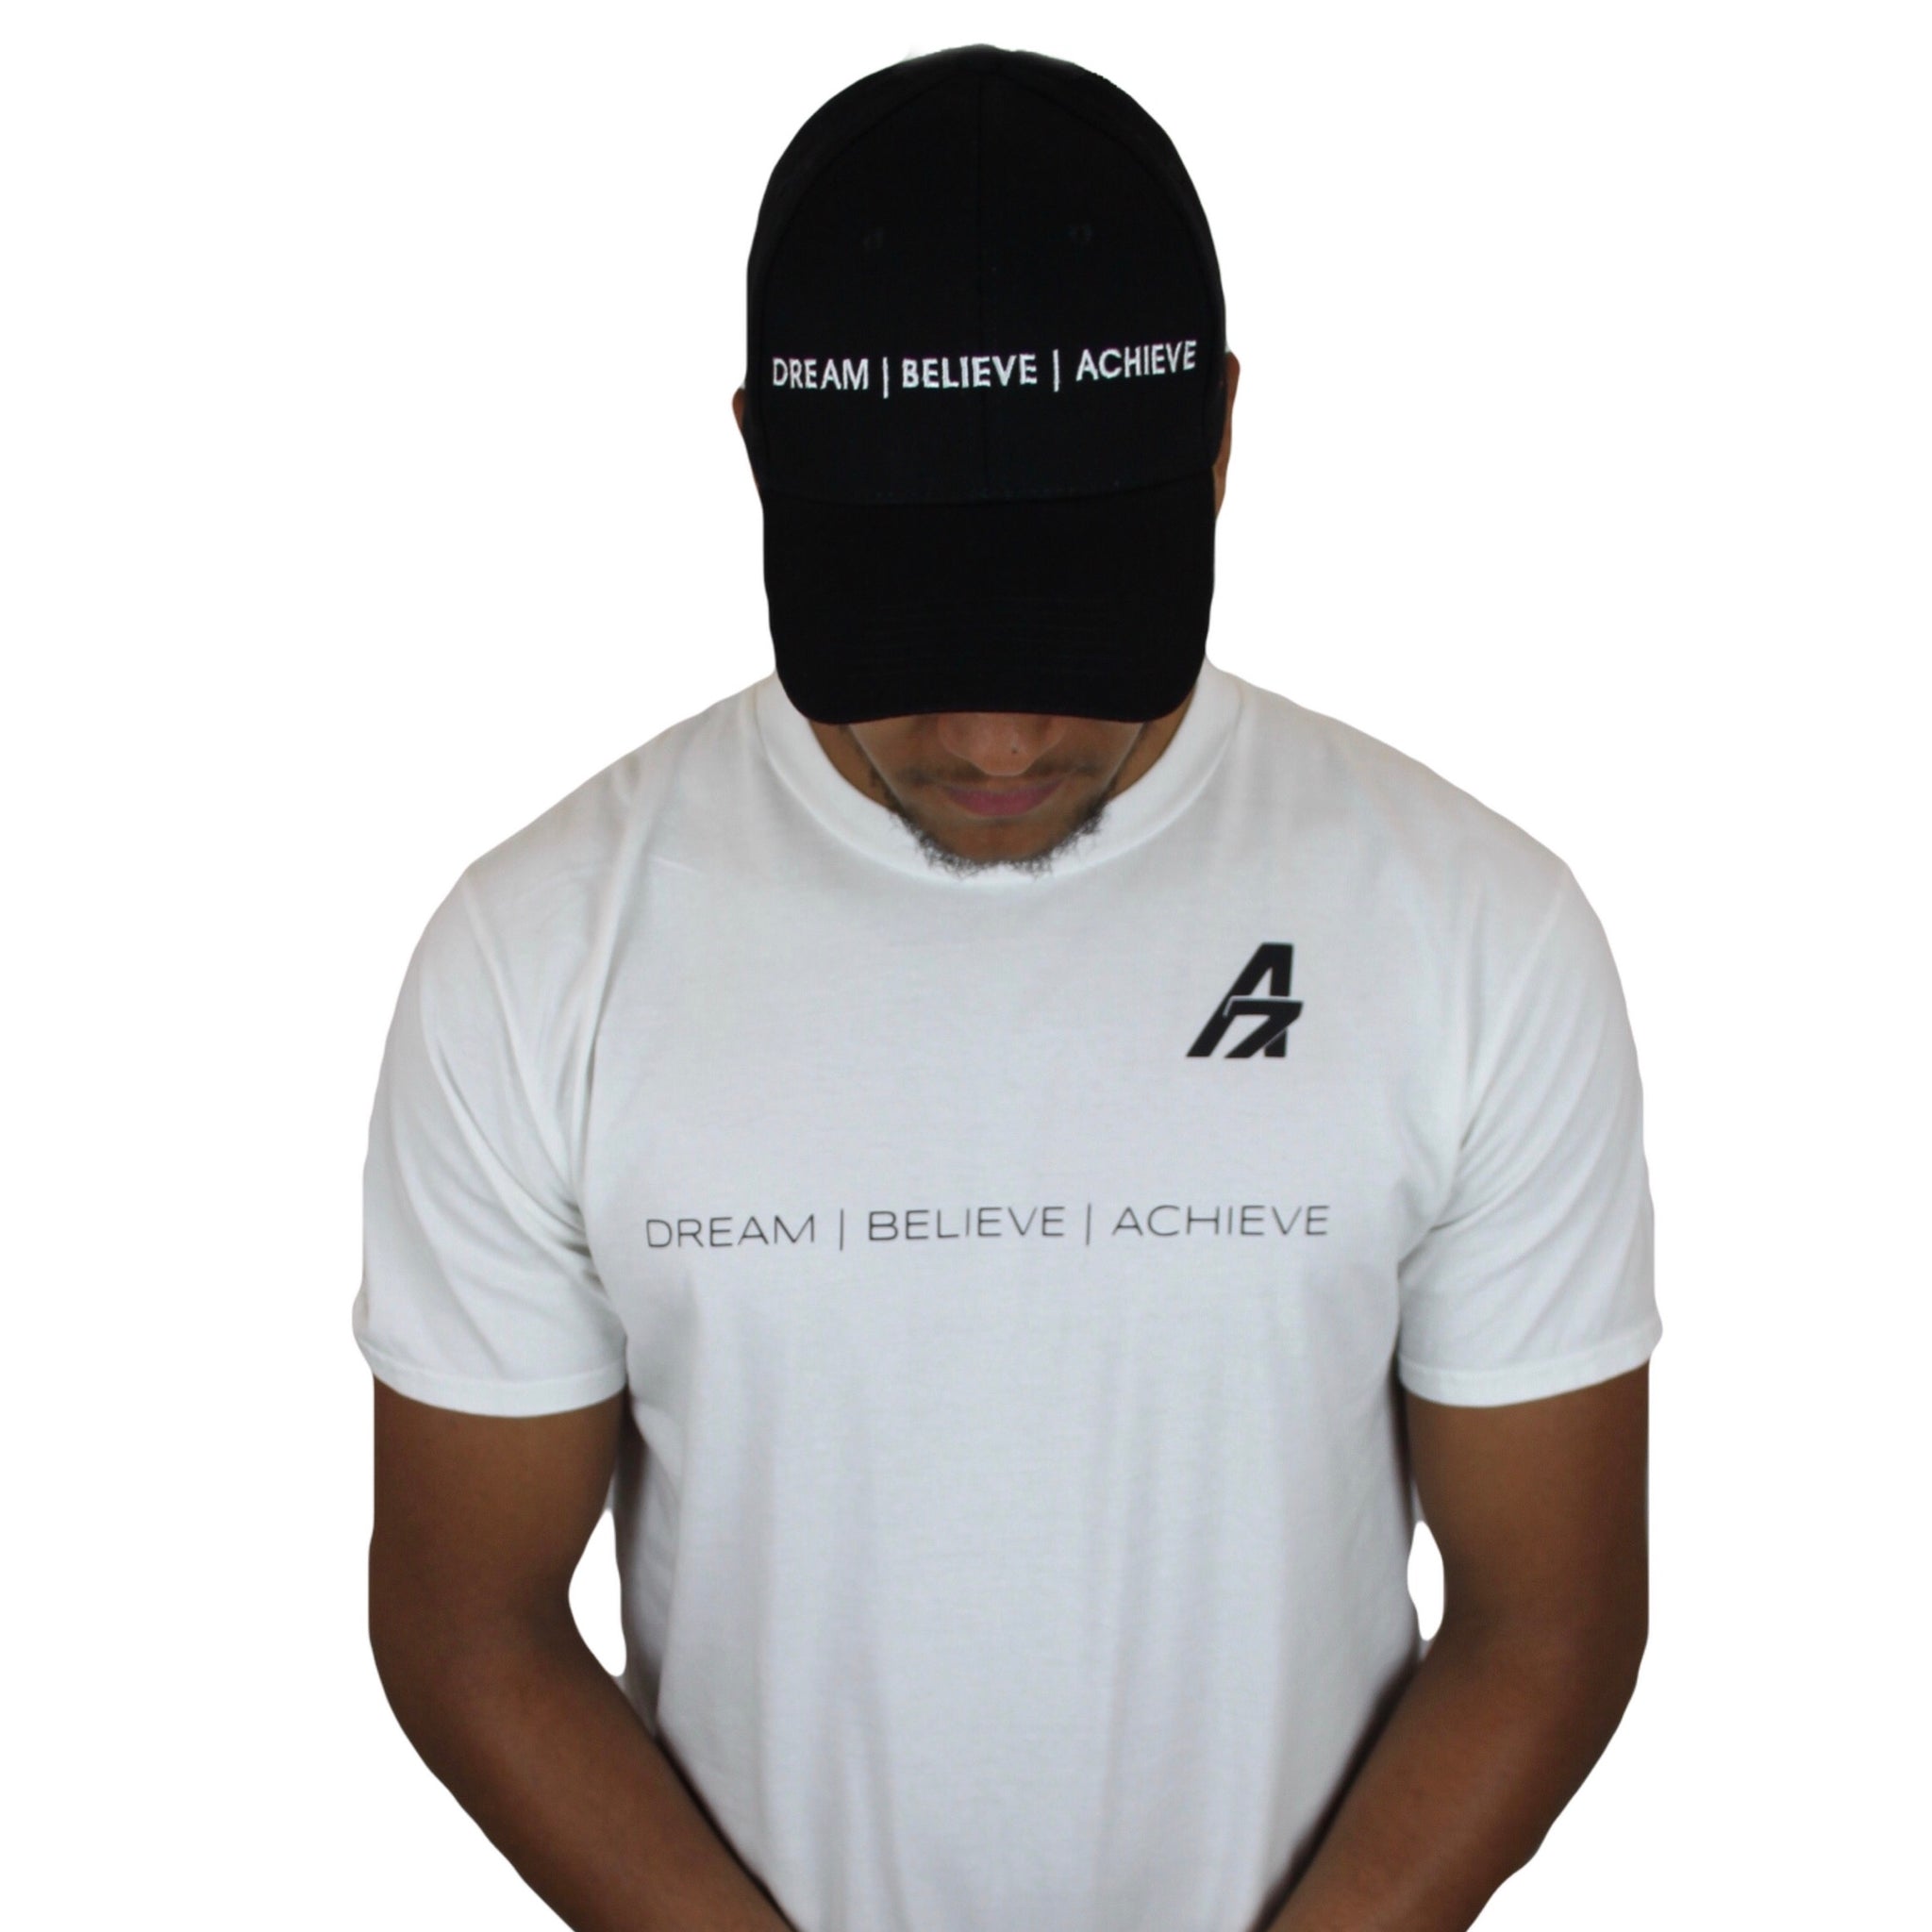 A7Asher "Dream | Believe | Achieve" White T-Shirt, Black A7 Logo